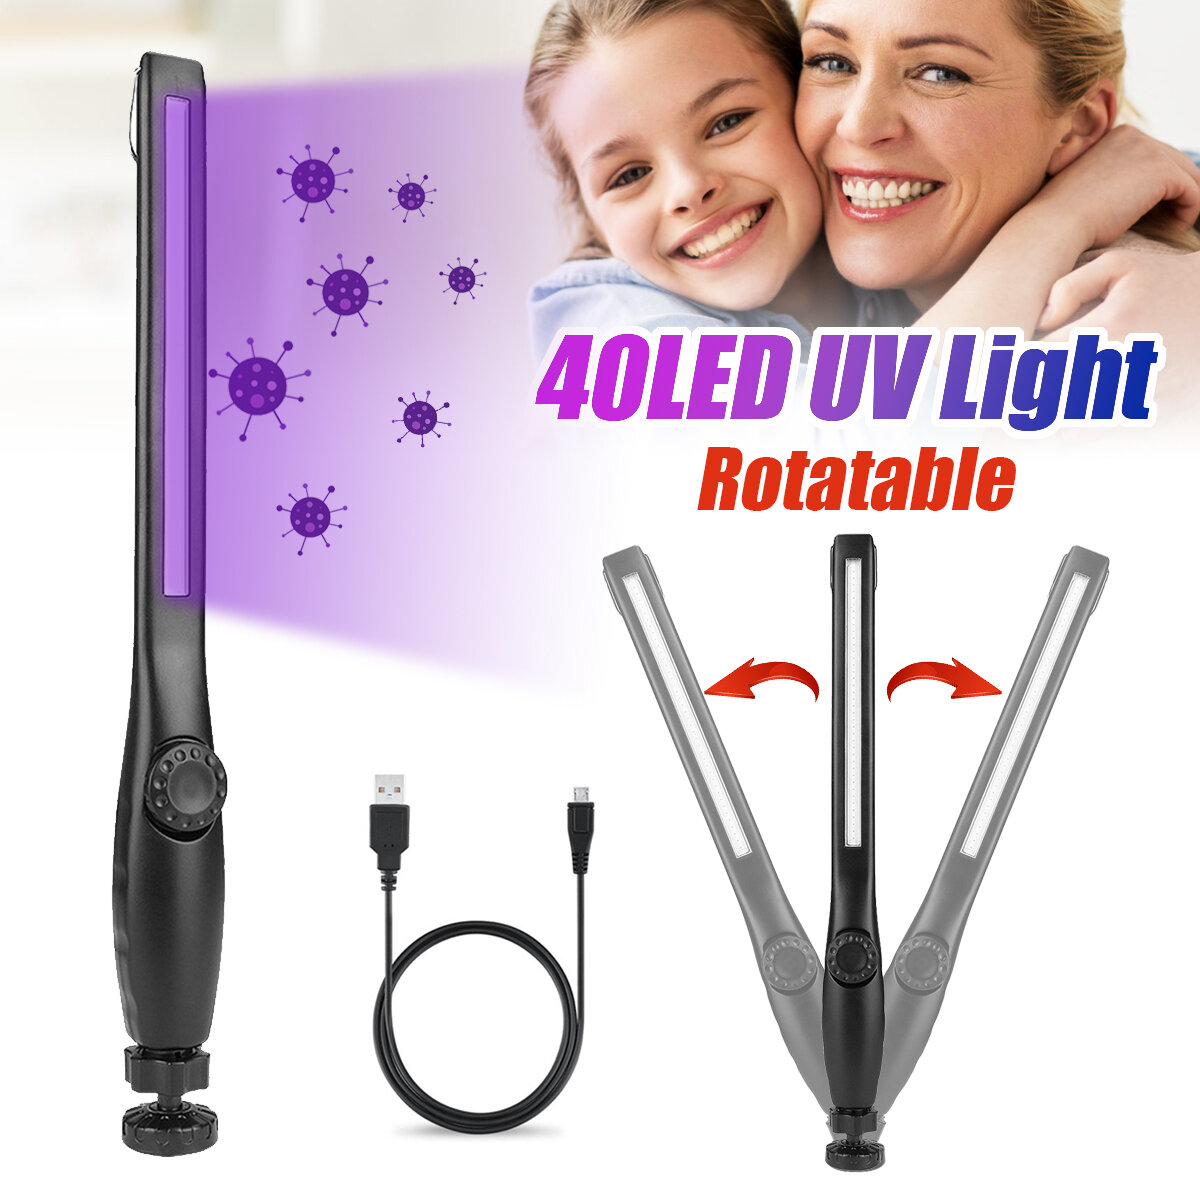 USB 40LED Portable Ultraviolet Sterilizer Light Handheld UV Disinfection Lamp